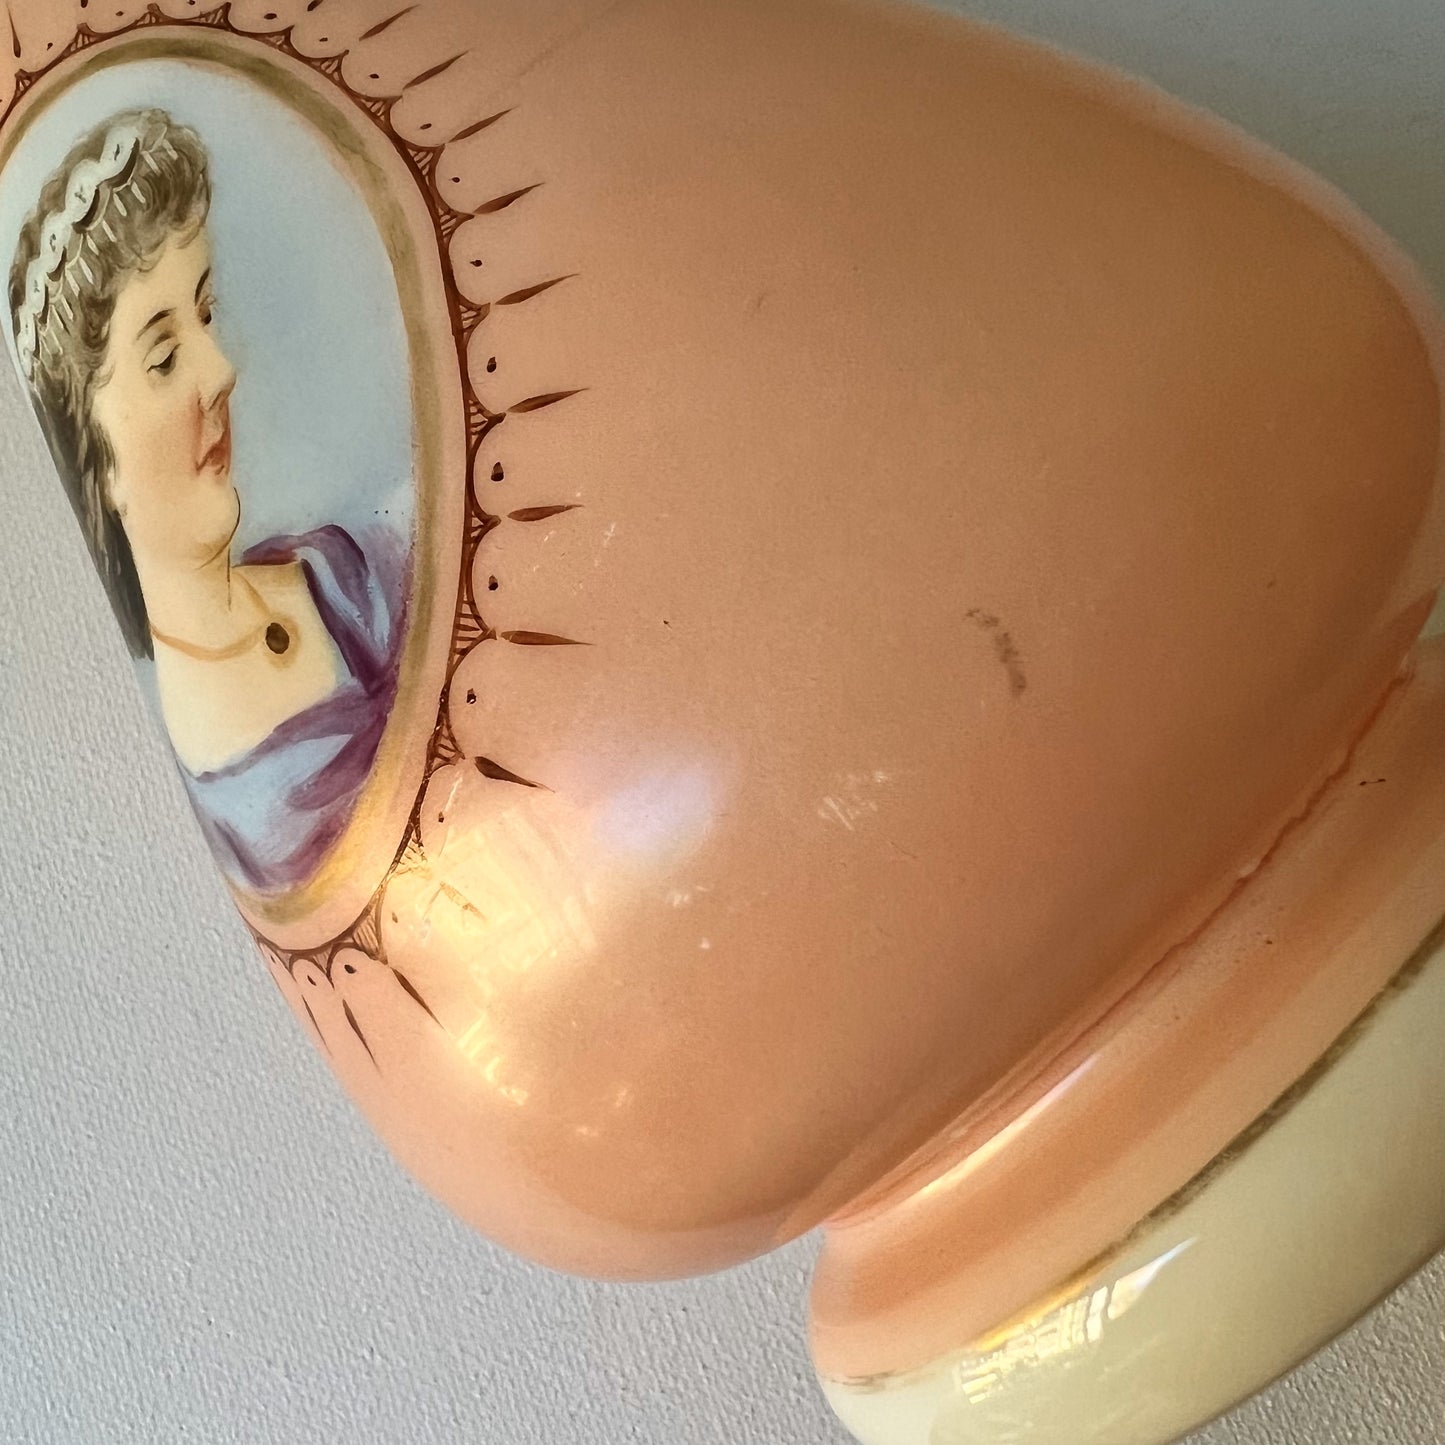 【Antique】France ‐ 1900s Milk Glass Lady's Vase